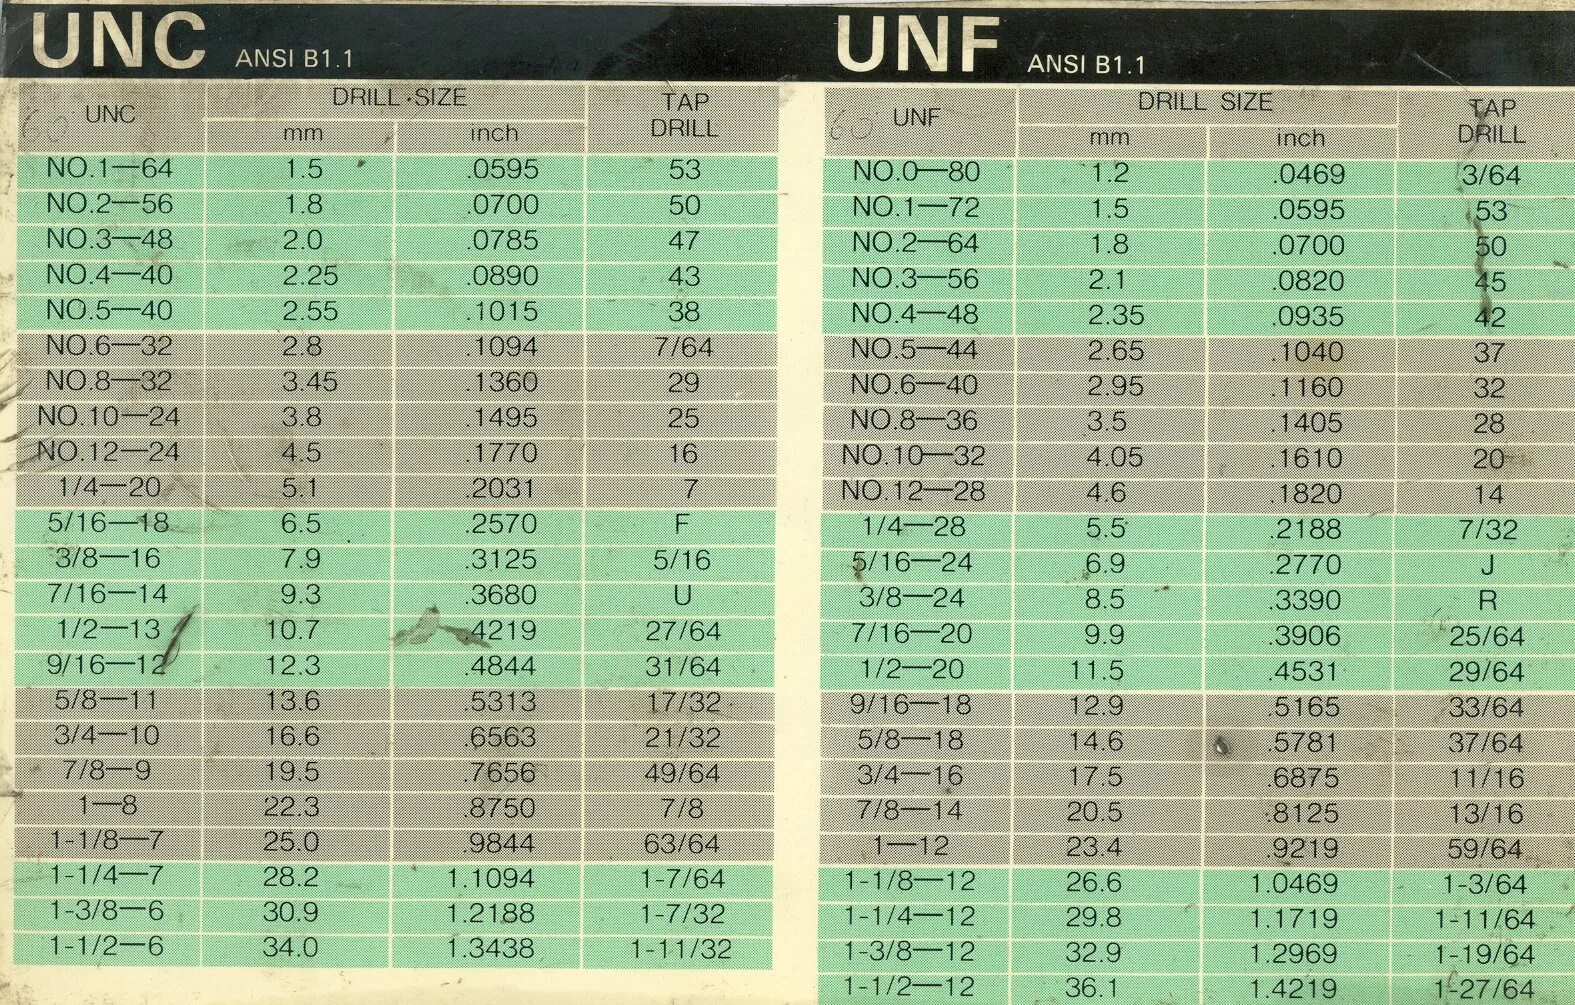 1 unf резьба. 9/16 UNF дюйма в мм резьба. Резьба 4-40 UNC-2a. Дюймовая резьба 5/16 UNC. Резьба 3/8-16 UNC.